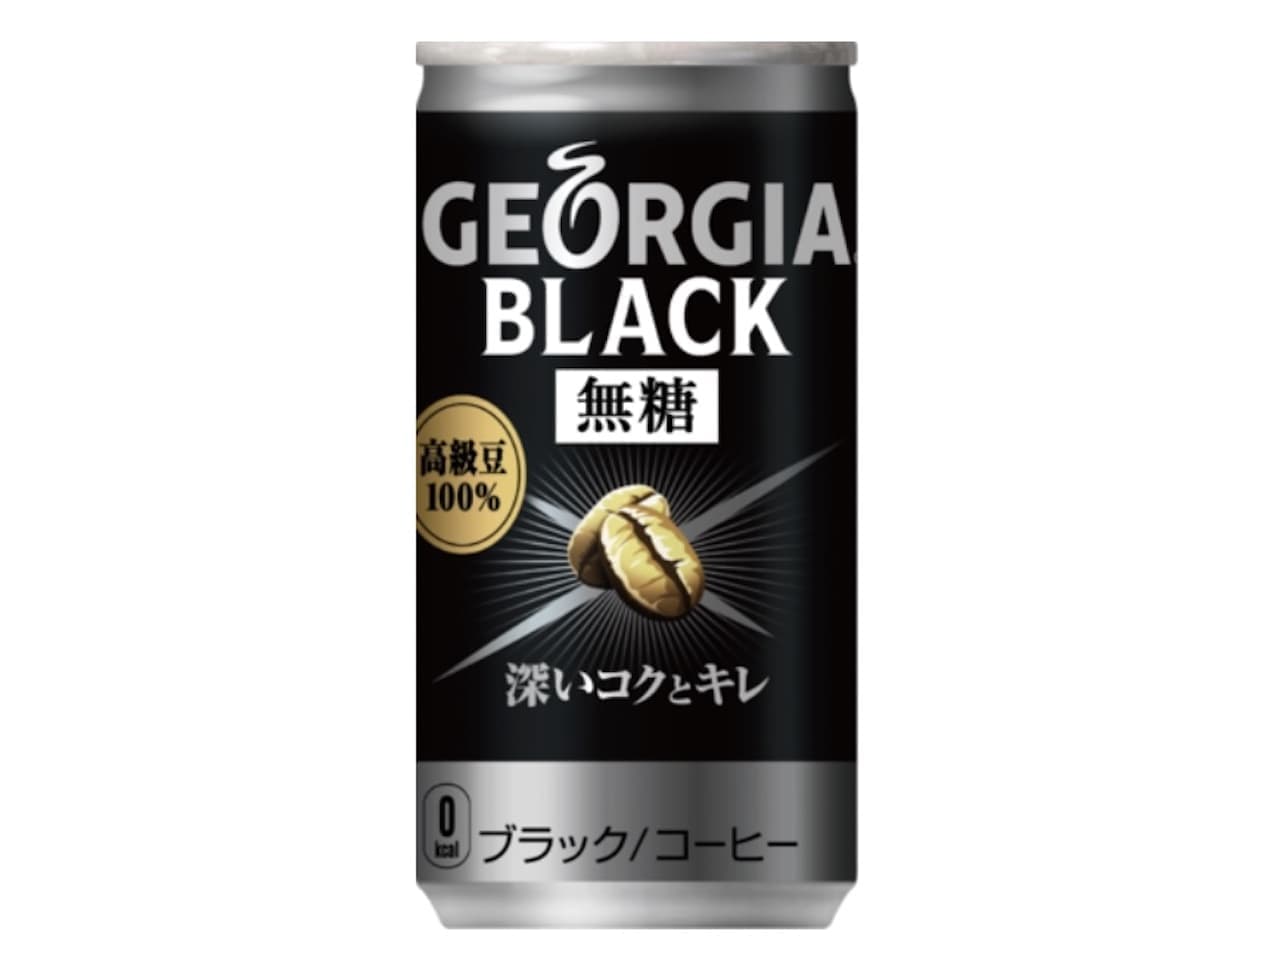 Black canned coffee "Georgia Black"